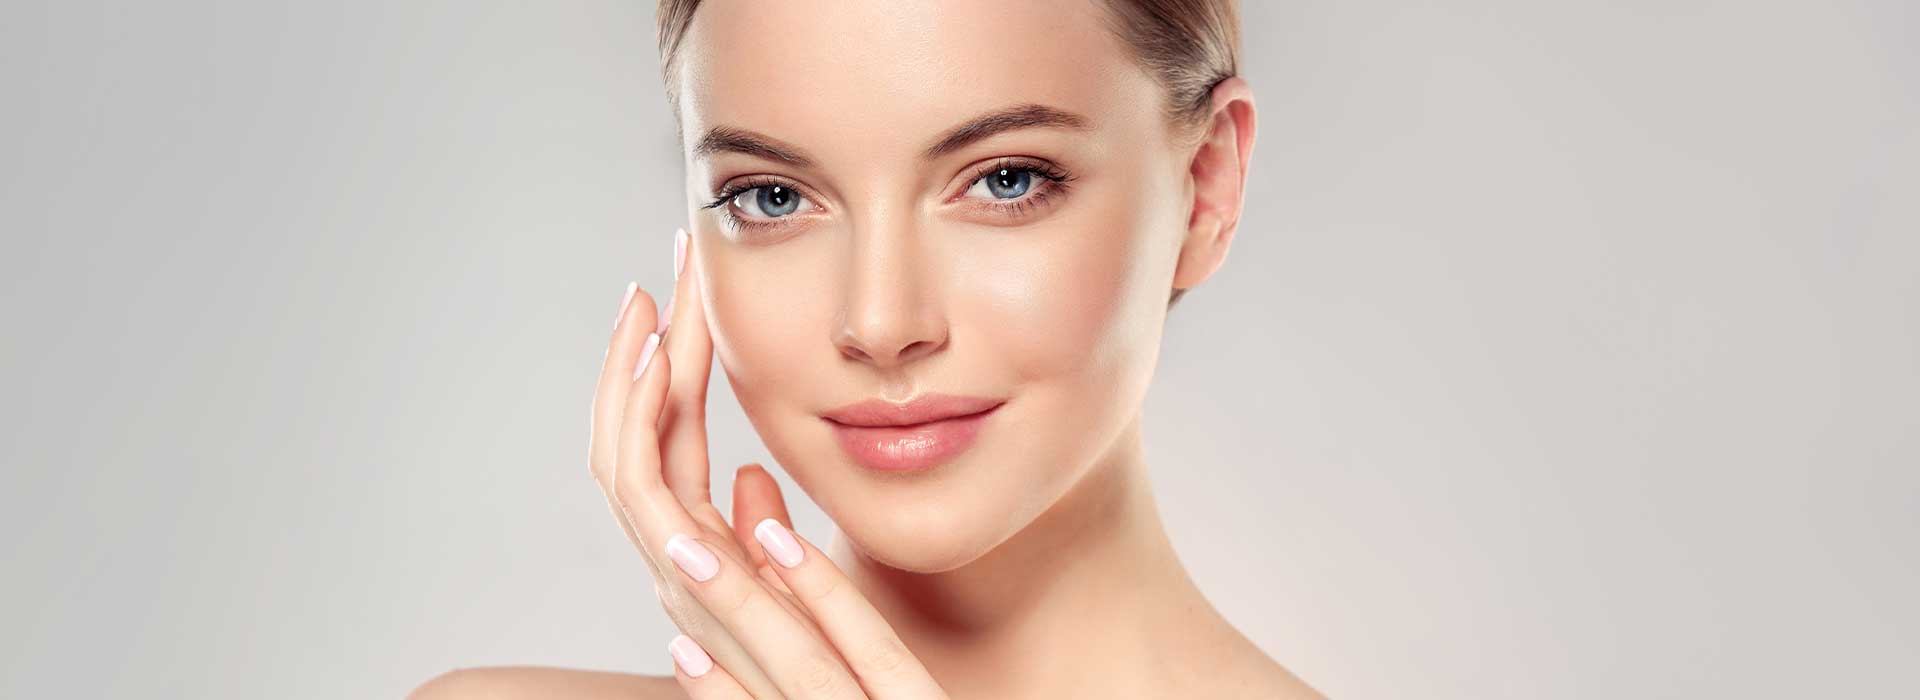 PRP Facial Rejuvenation treatments at Perfect Skin MD